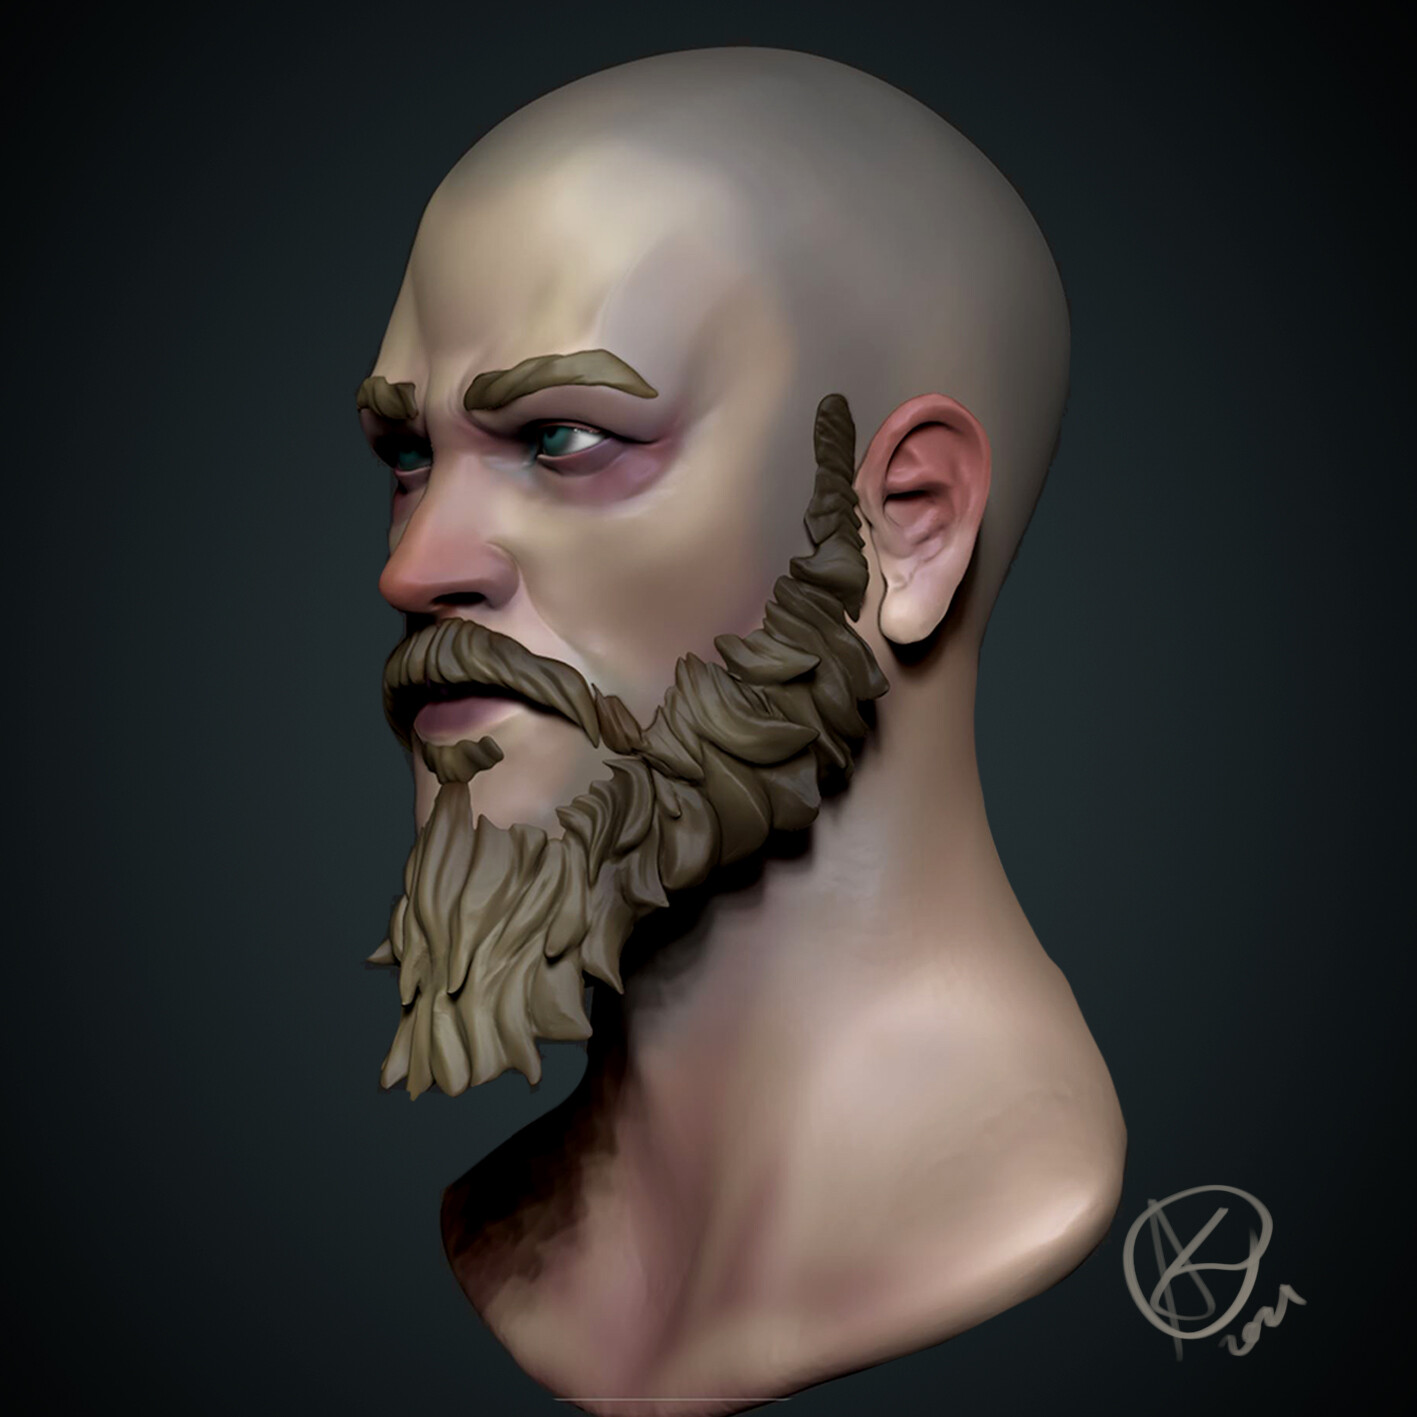 ArtStation - Ragnar stylized portrait